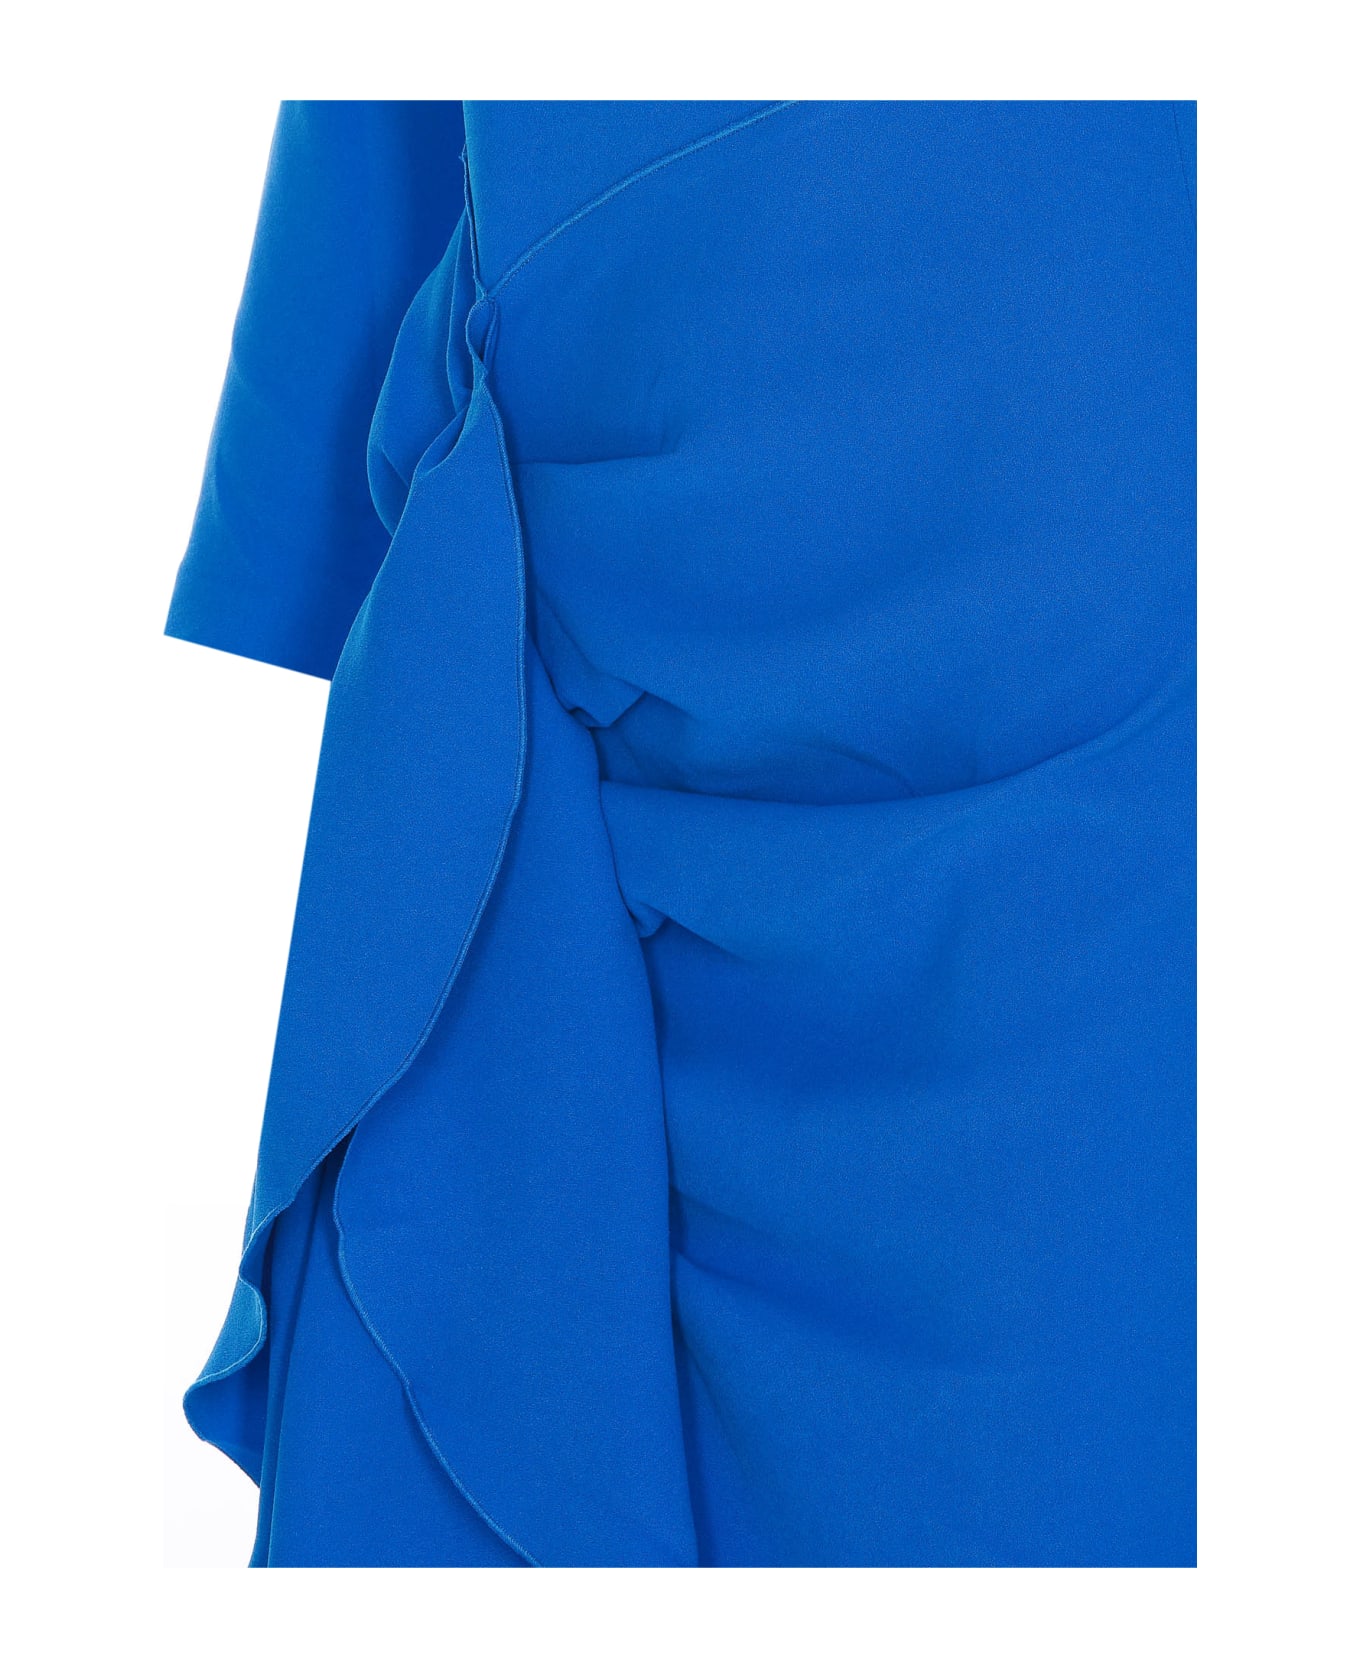 Solace London Nia Maxi Dress - Blue ワンピース＆ドレス